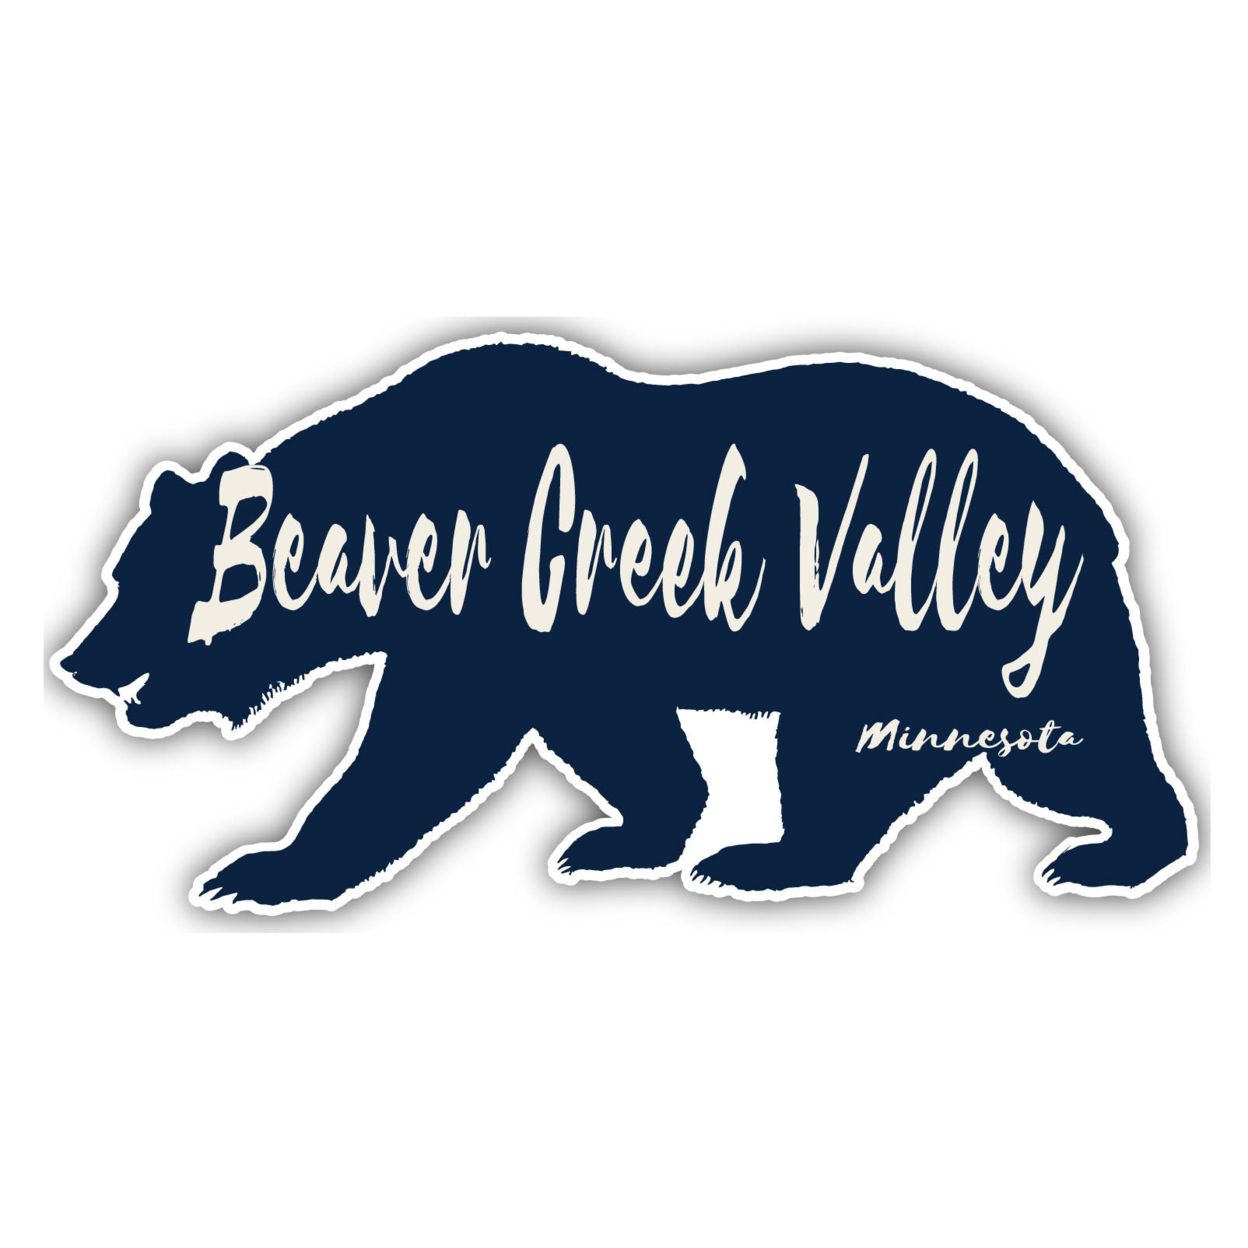 Beaver Creek Valley Minnesota Souvenir Decorative Stickers (Choose Theme And Size) - 4-Pack, 4-Inch, Bear